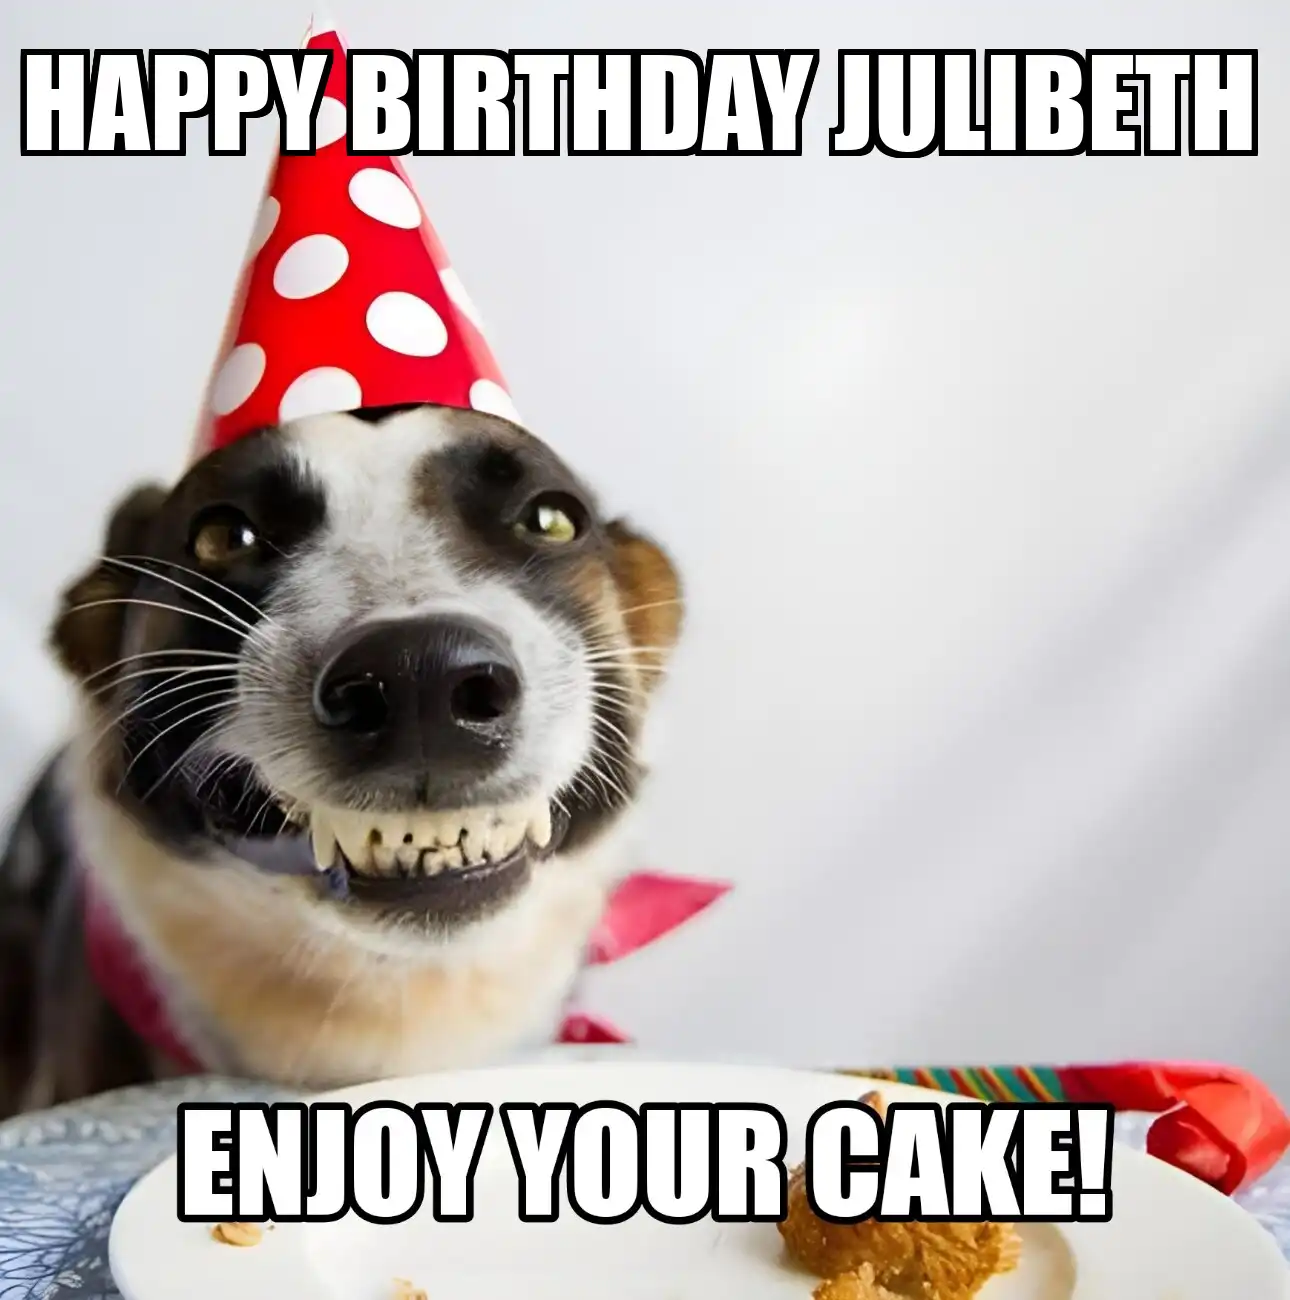 Happy Birthday Julibeth Enjoy Your Cake Dog Meme